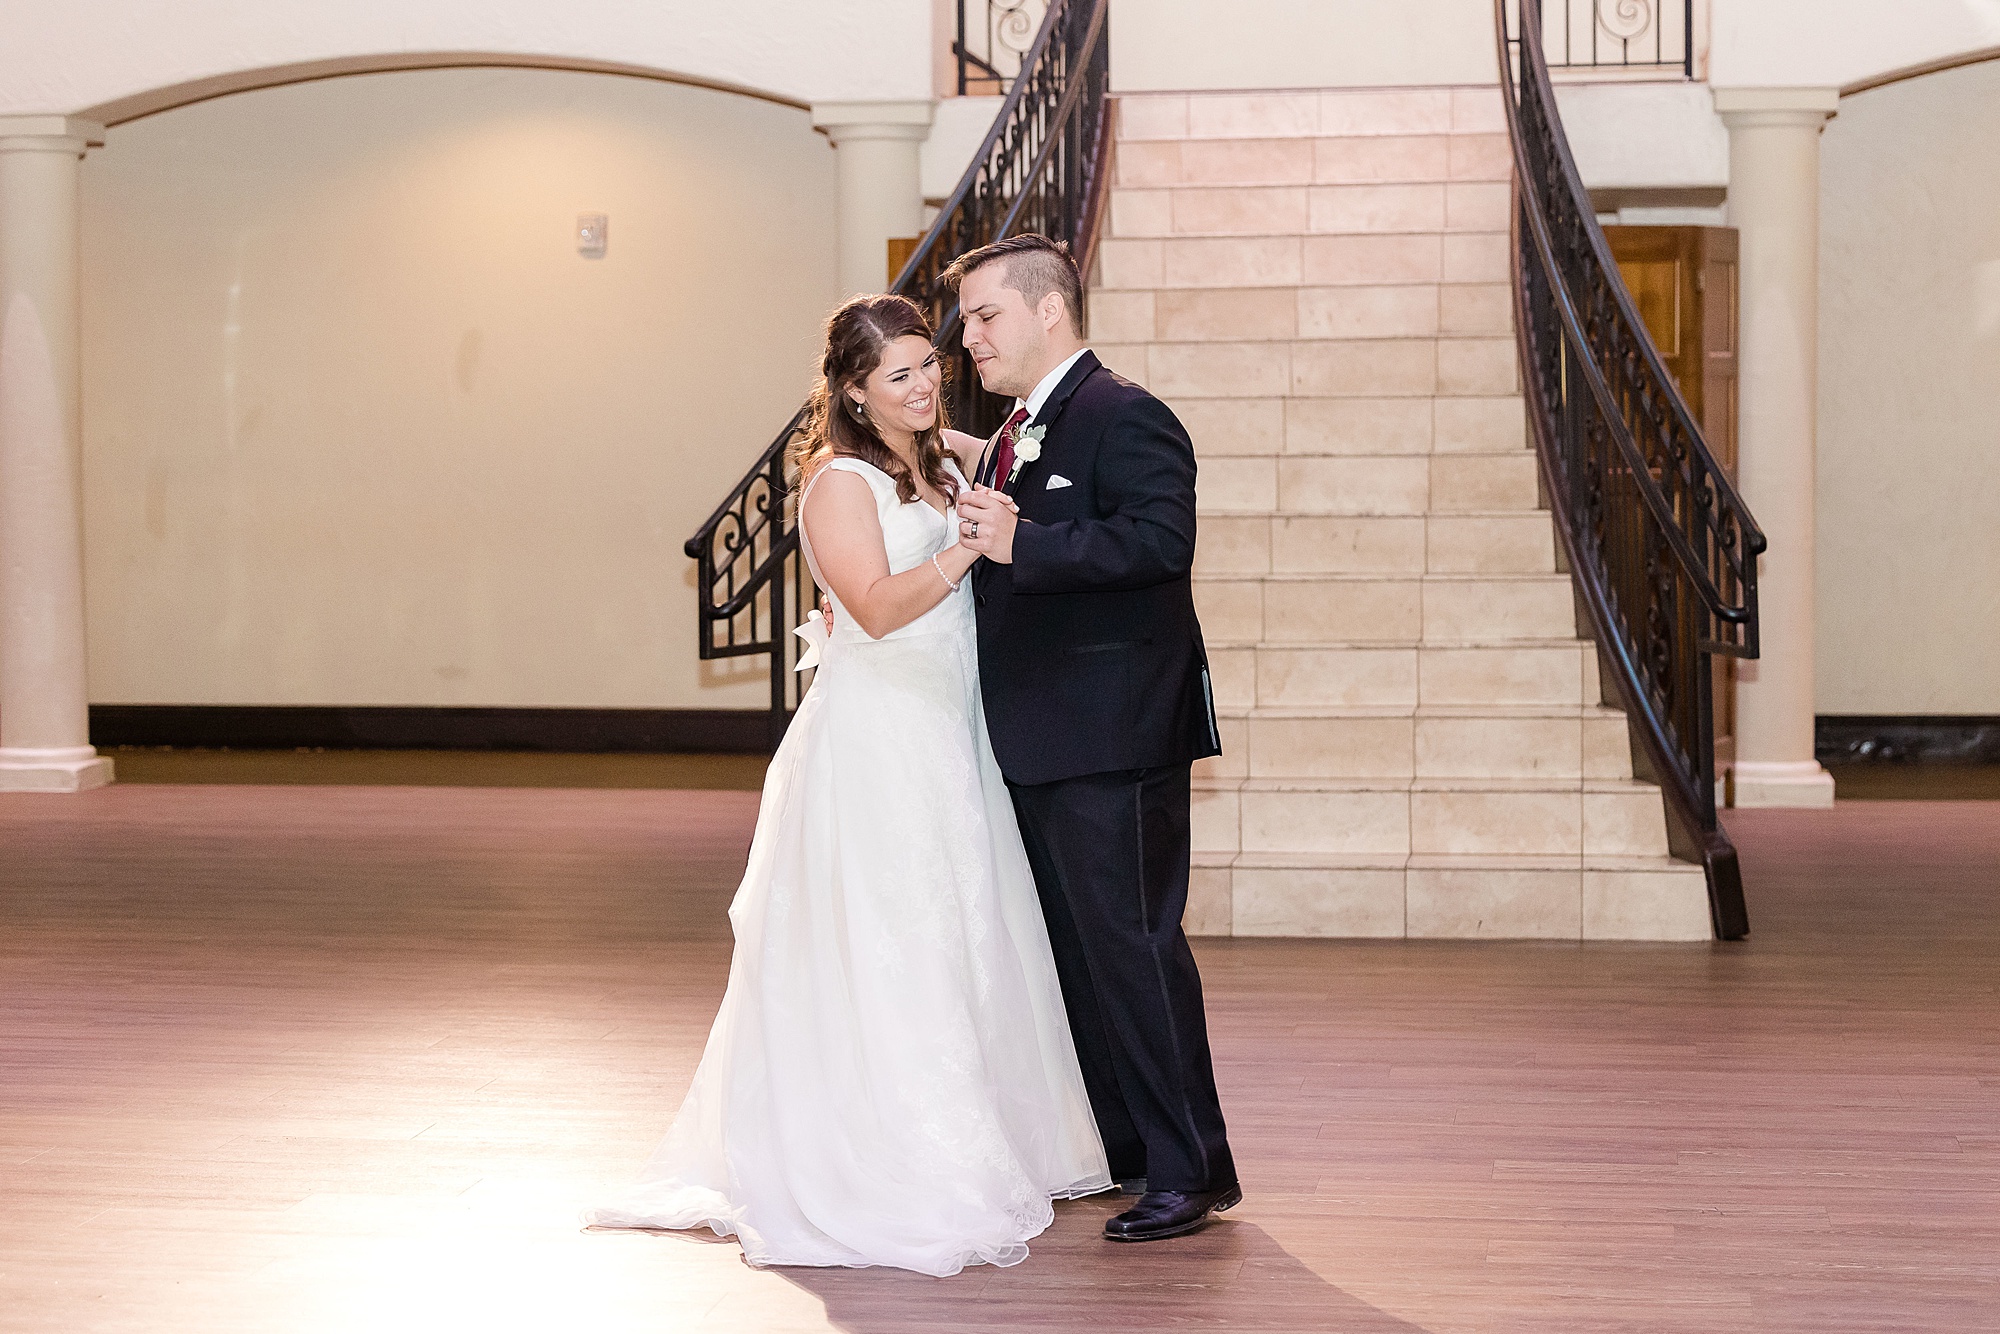 groom dances with bride during Texas wedding reception